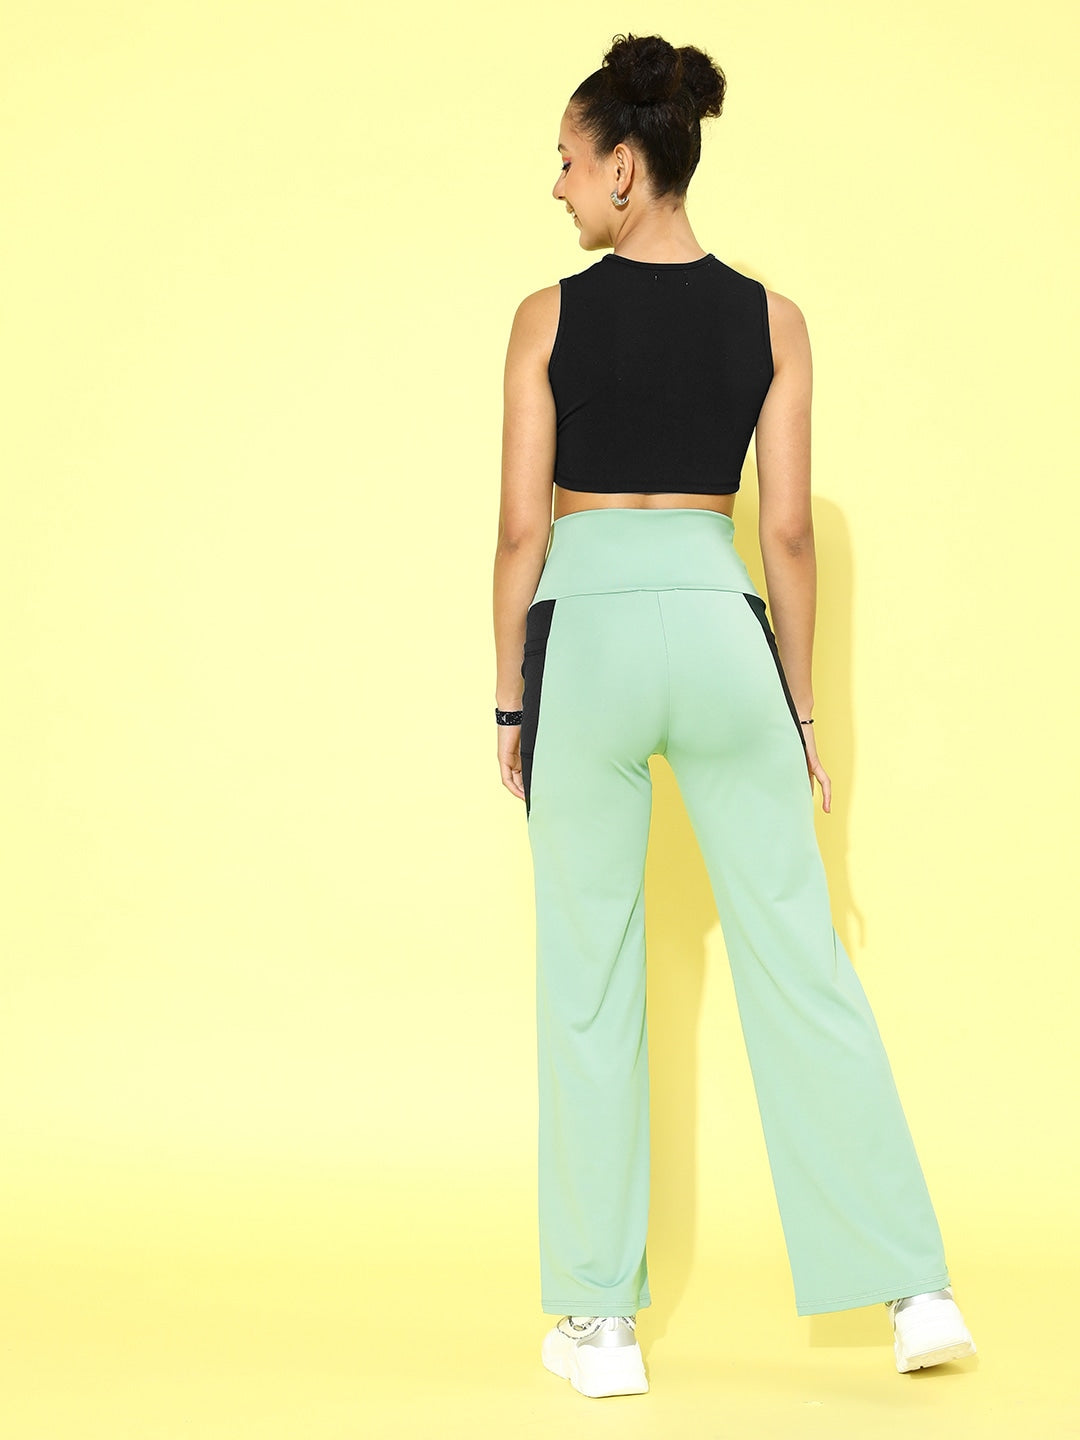 Women Olive & Black Colorblock Crop Top With Yoga Pants